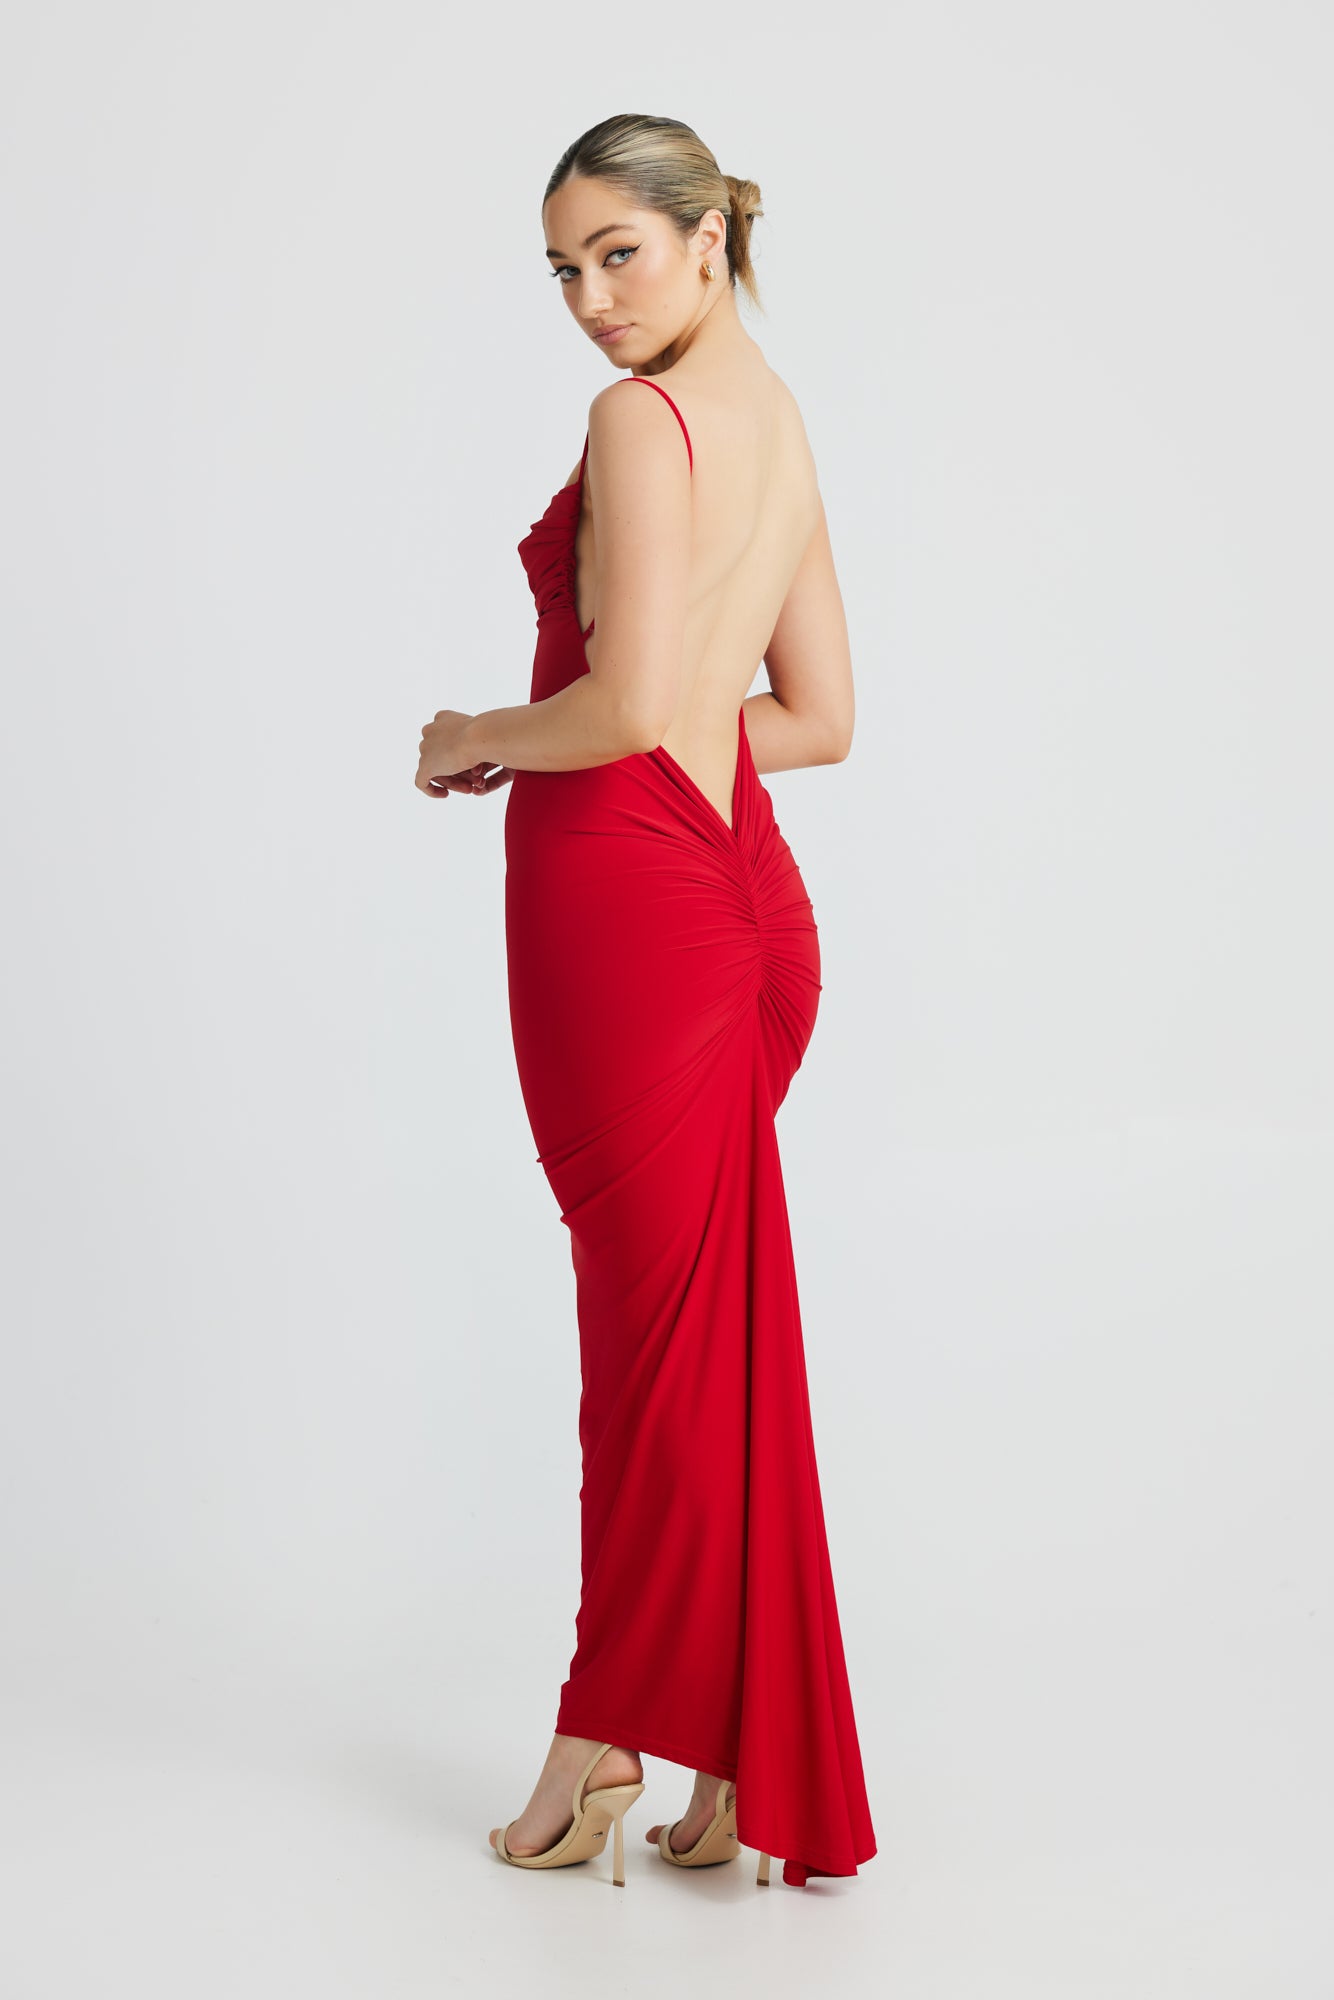 CELINA DRESS - RED